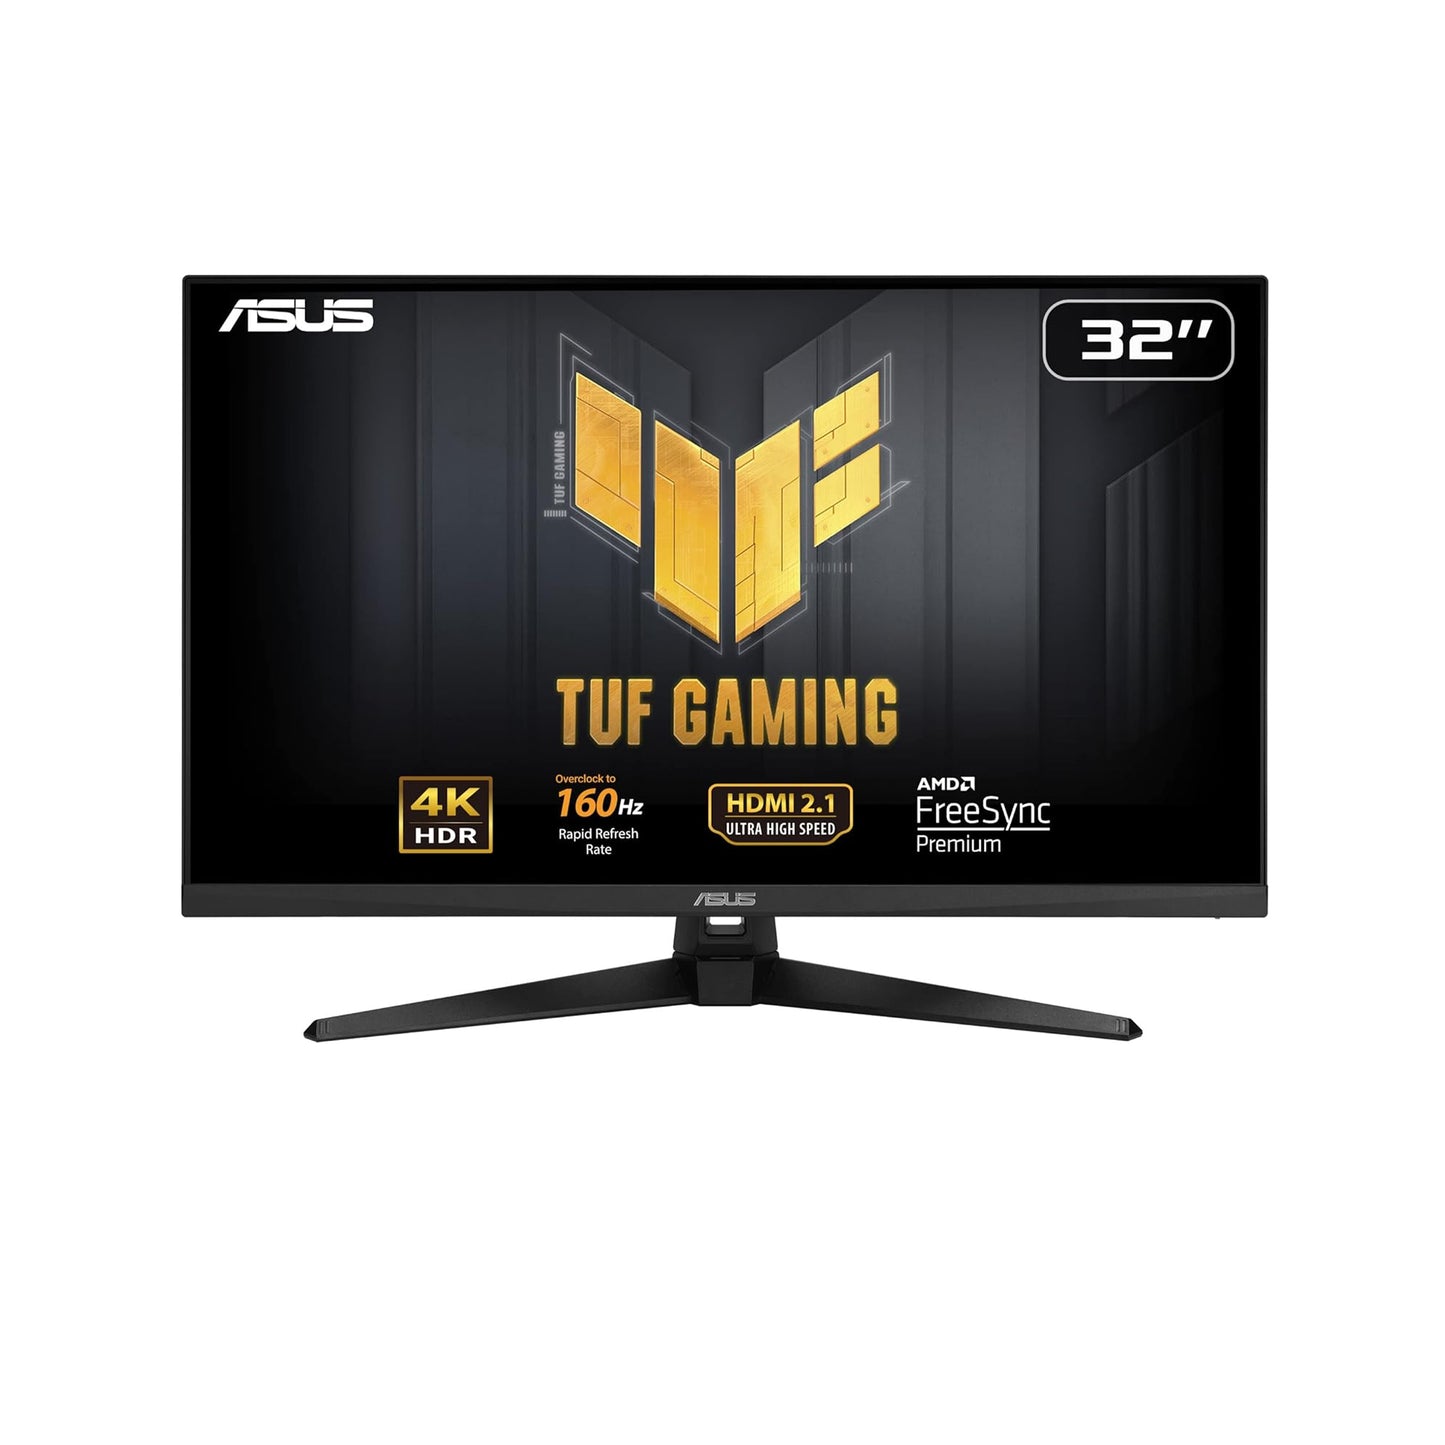 ASUS TUF Gaming 32” (31.5” viewable) 4K HDR DSC Gaming Monitor (VG32UQA1A) - UHD (3840 x 2160), 160Hz, 1ms, Extreme Low Motion Blur Sync, Freesync Premium, HDMI2.1, Speakers, 120% sRGB, DisplayHDR 400